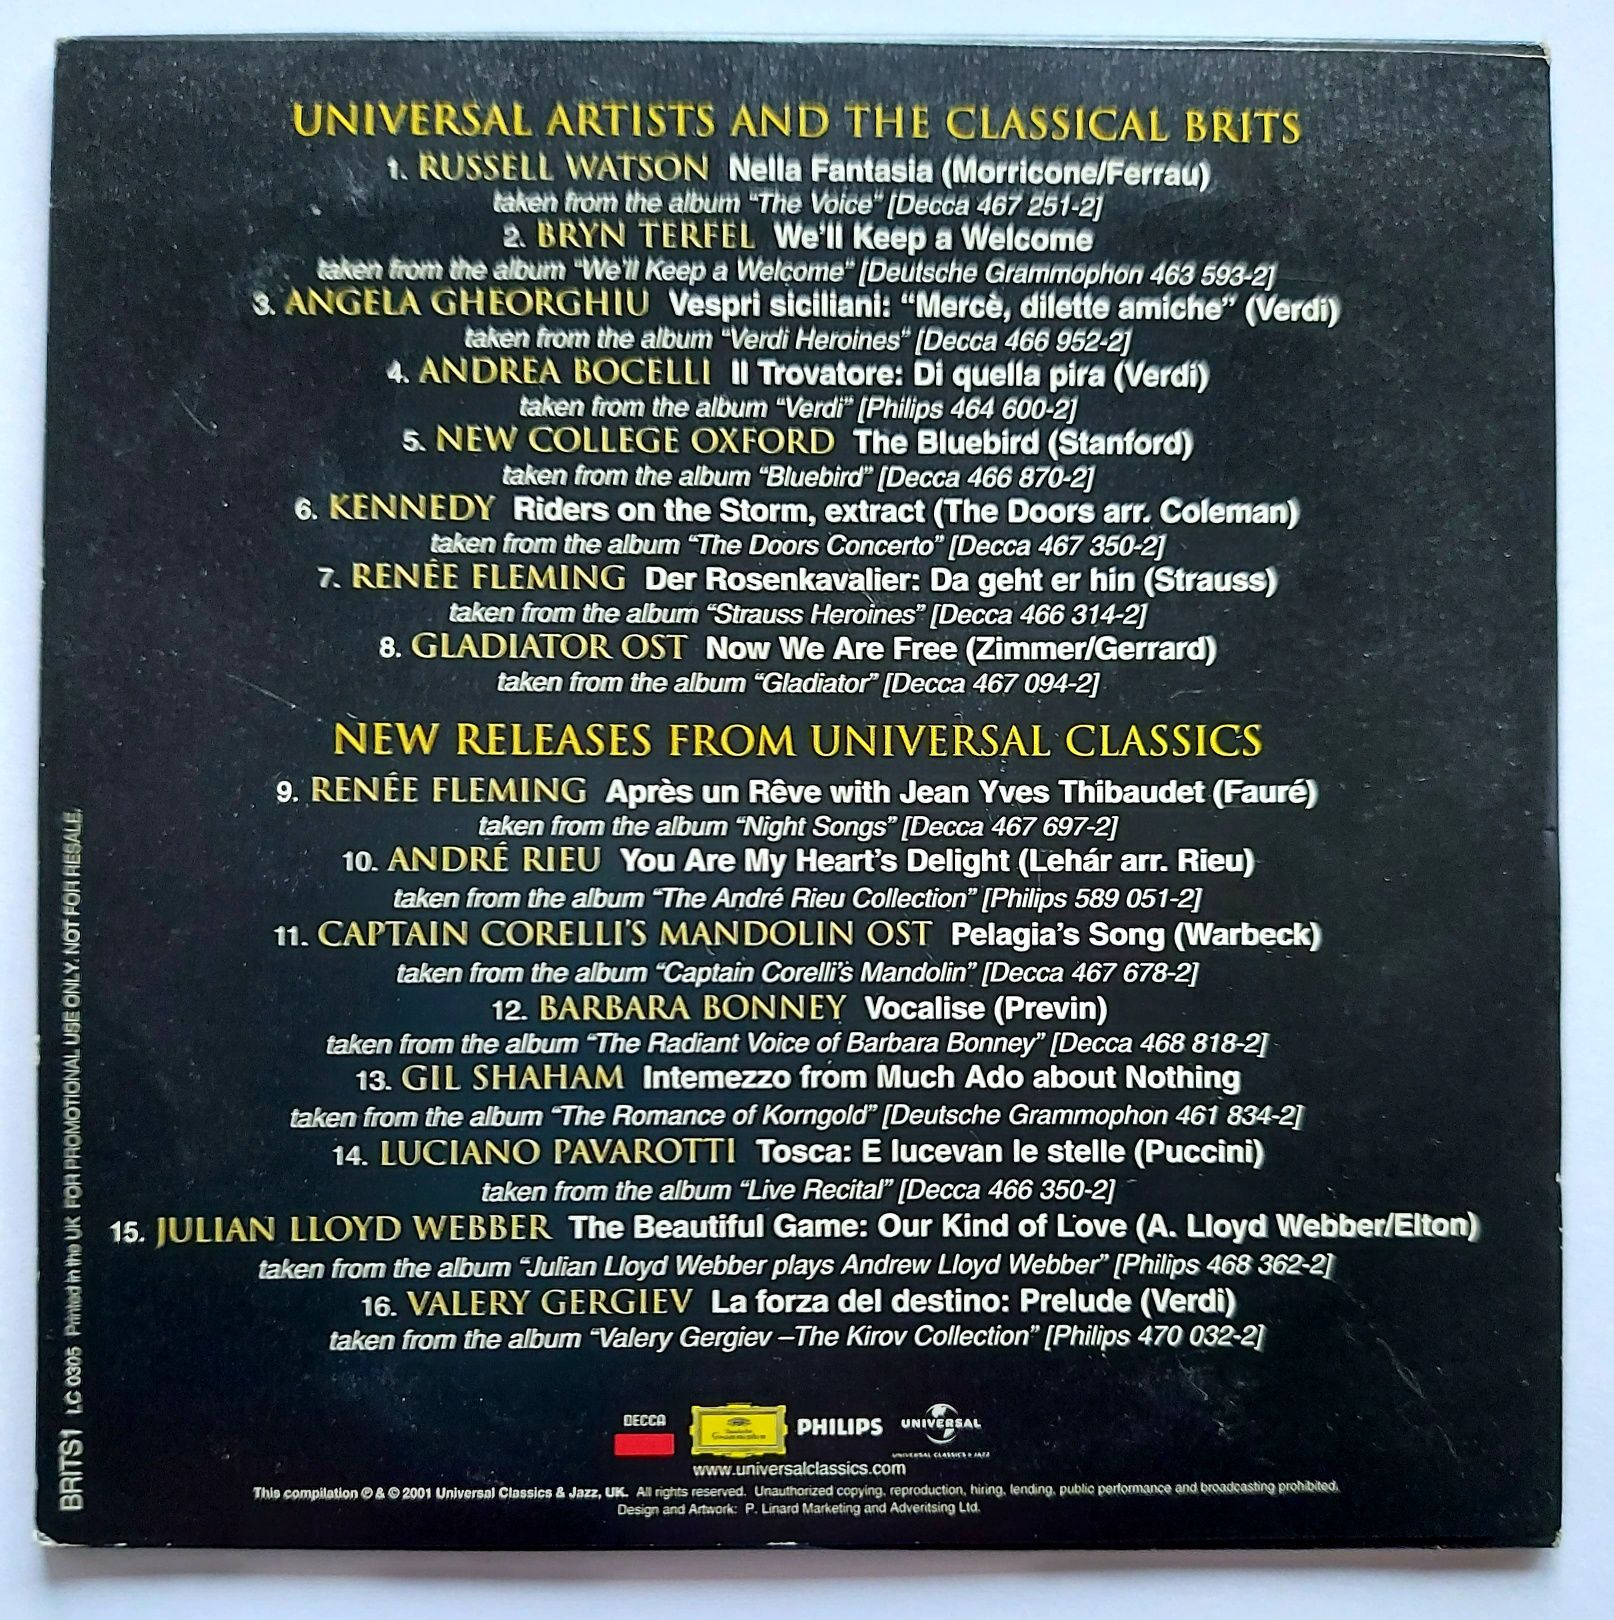 Universal Classics And Jazz 2001r Promo